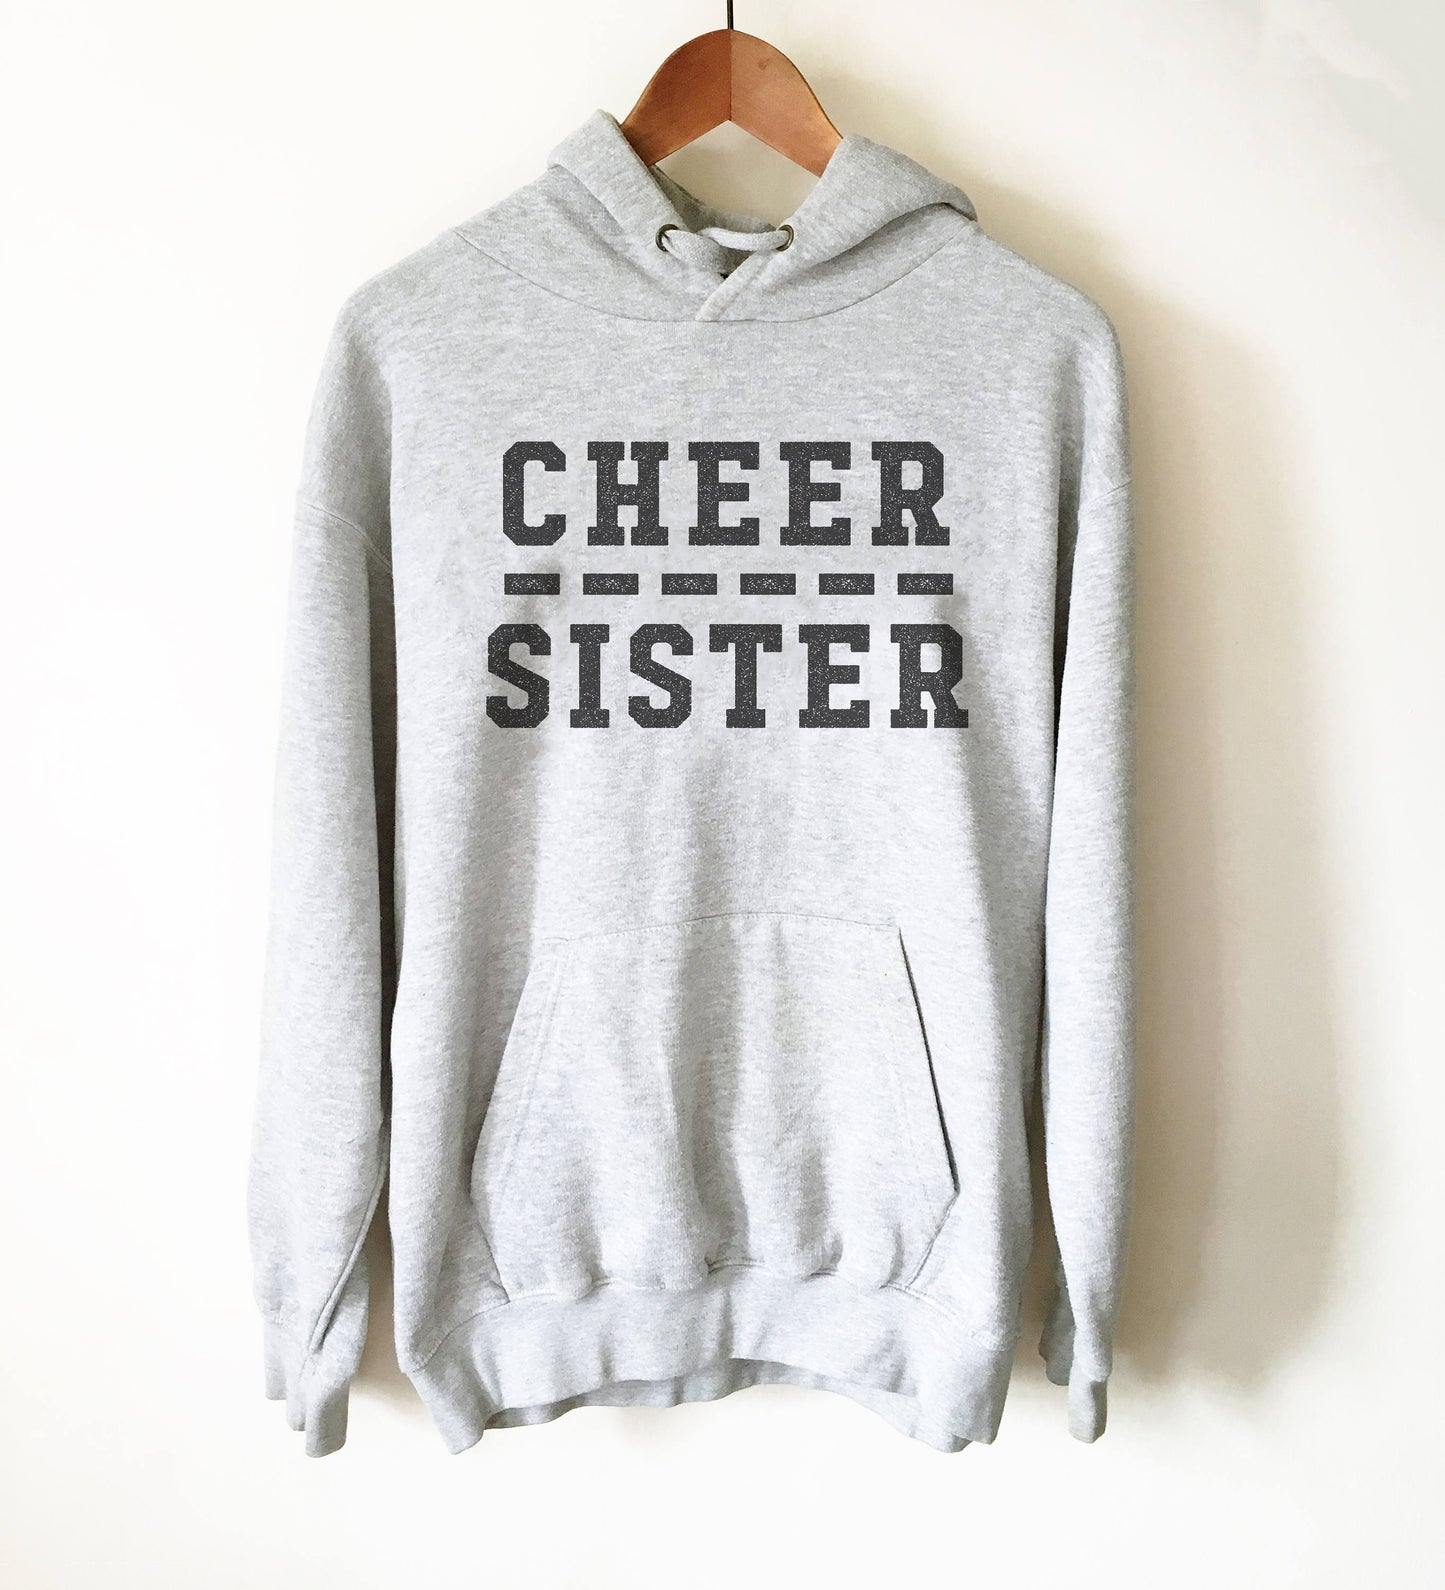 Cheer Sister Hoodie - Cheerleading Gifts, Cheer Sister Shirt, Cheer Shirt, Cheerleading Sister, Cheer Gift, Big Sister Shirt, Gameday Shirt